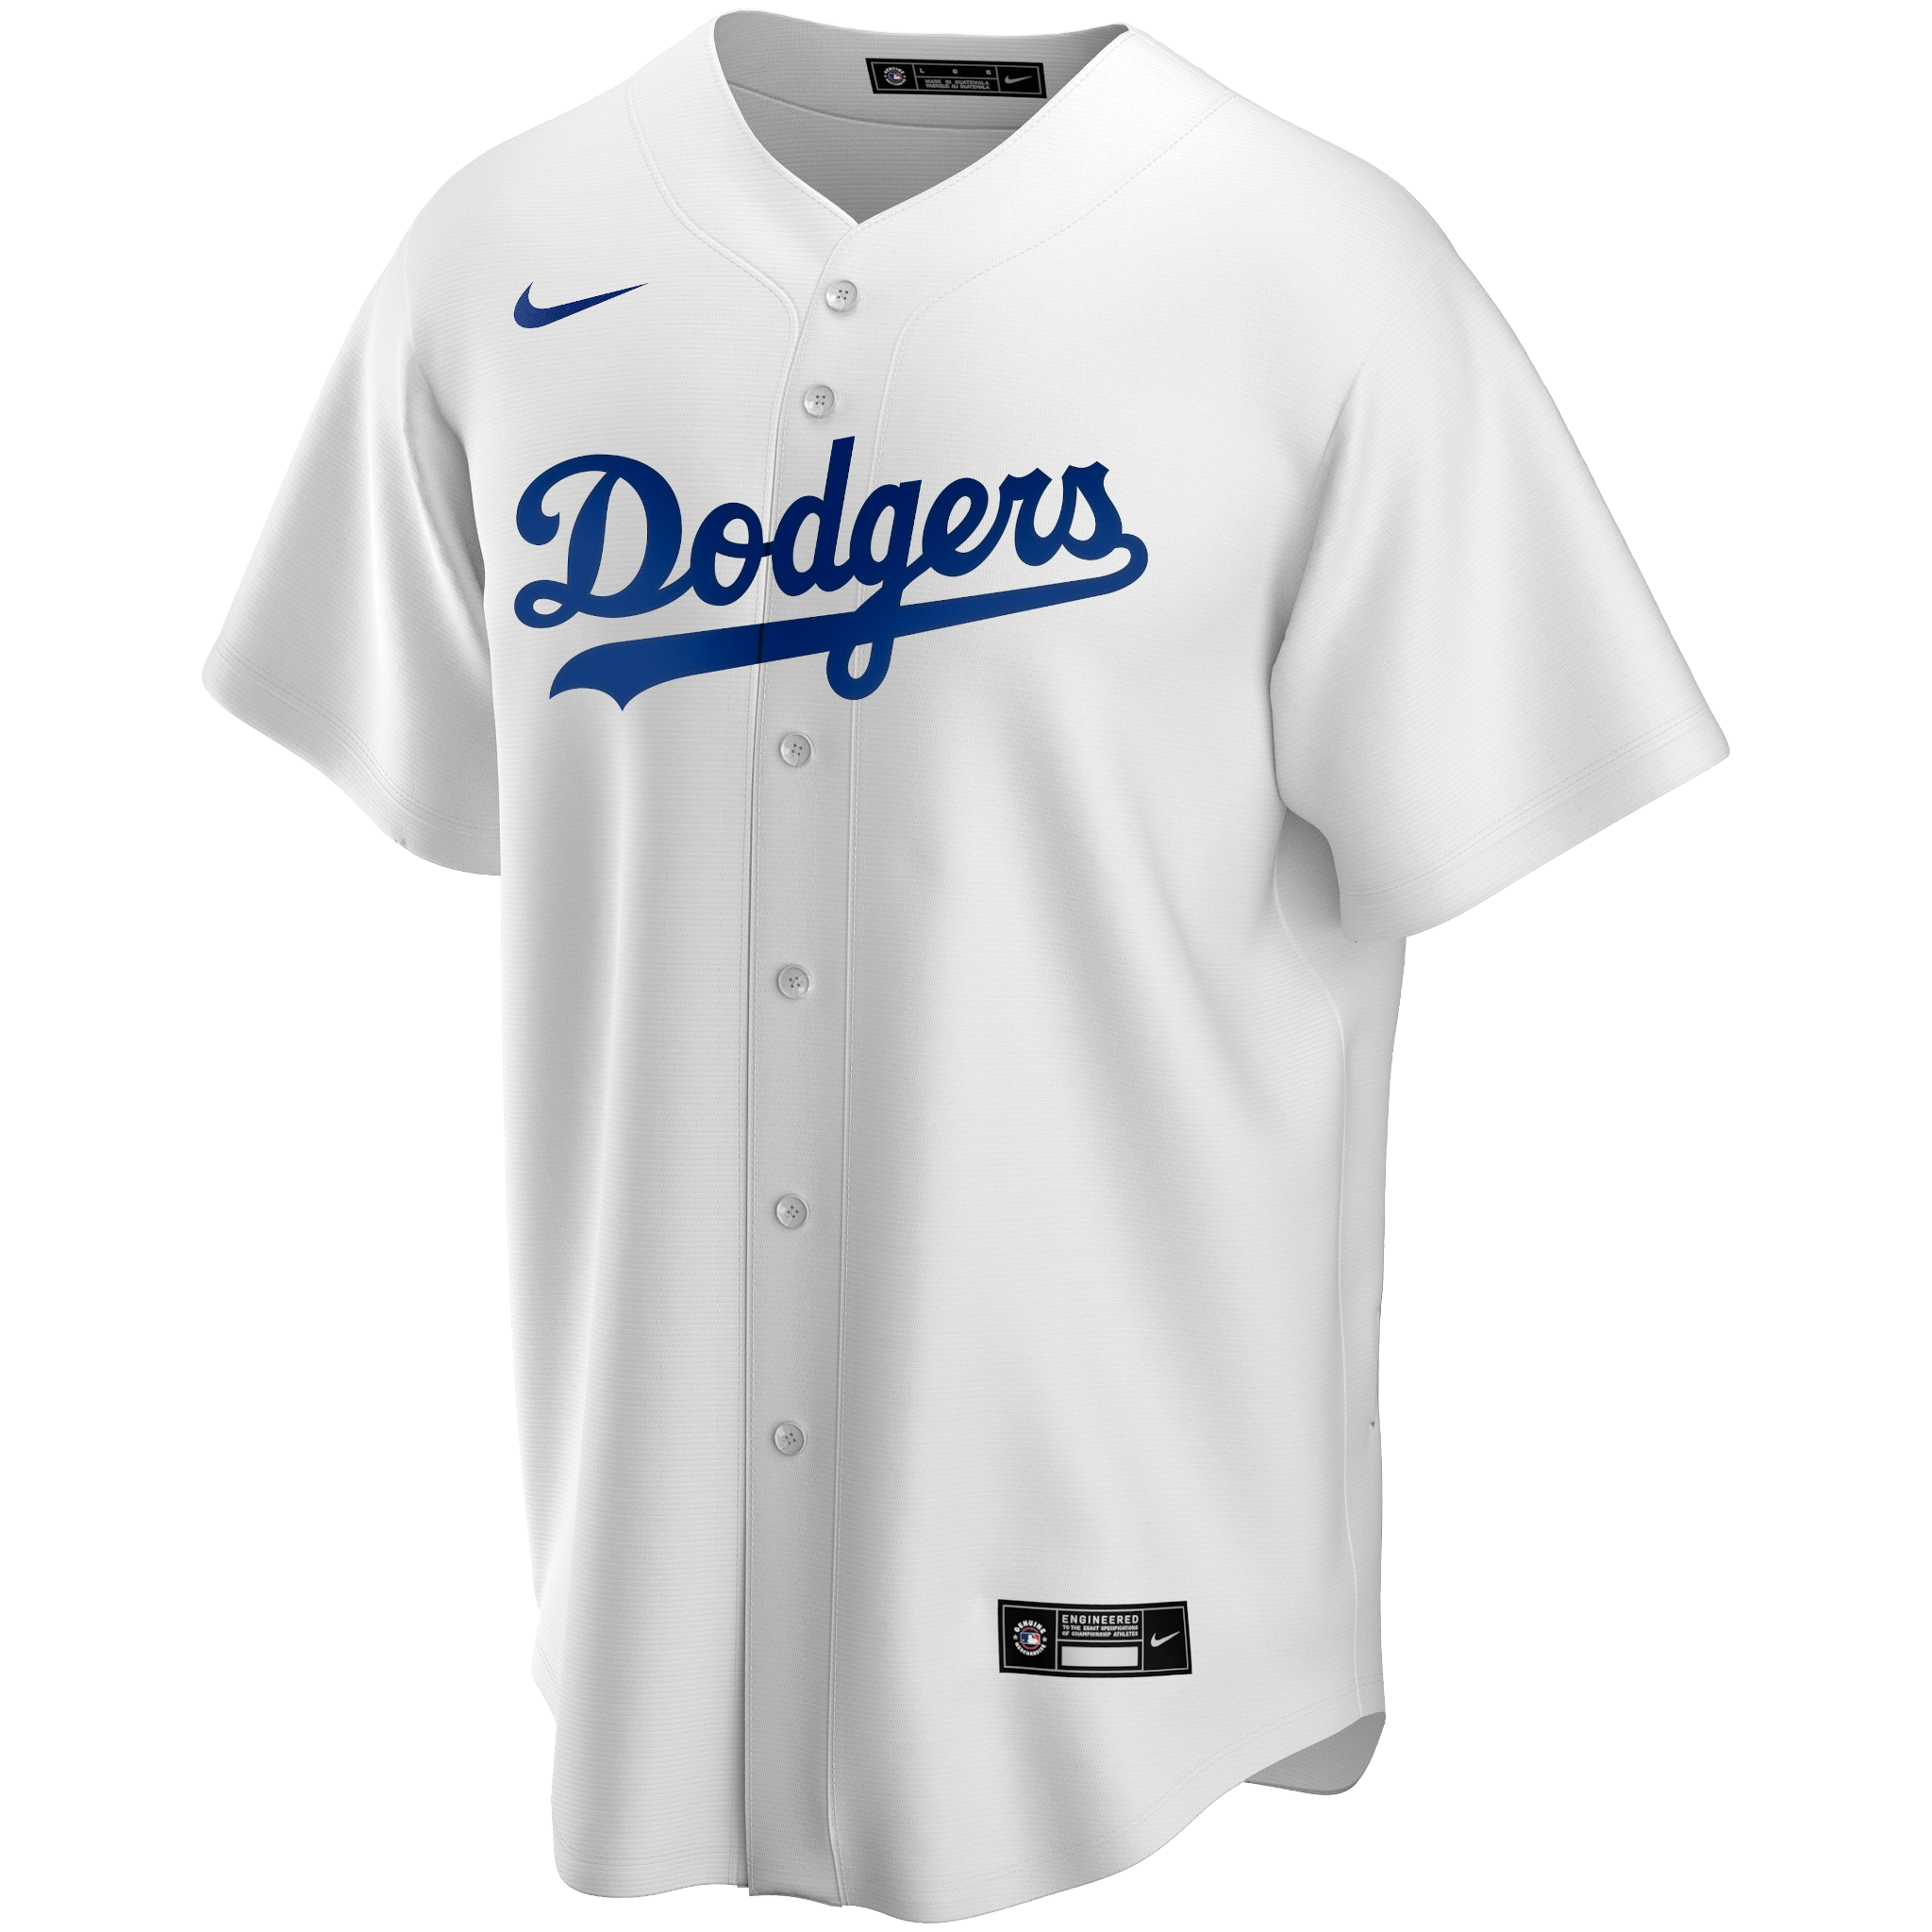 Jackie Robinson Brooklyn Dodgers Baseball SGA Replica Jersey Gray Size XL  Xlg